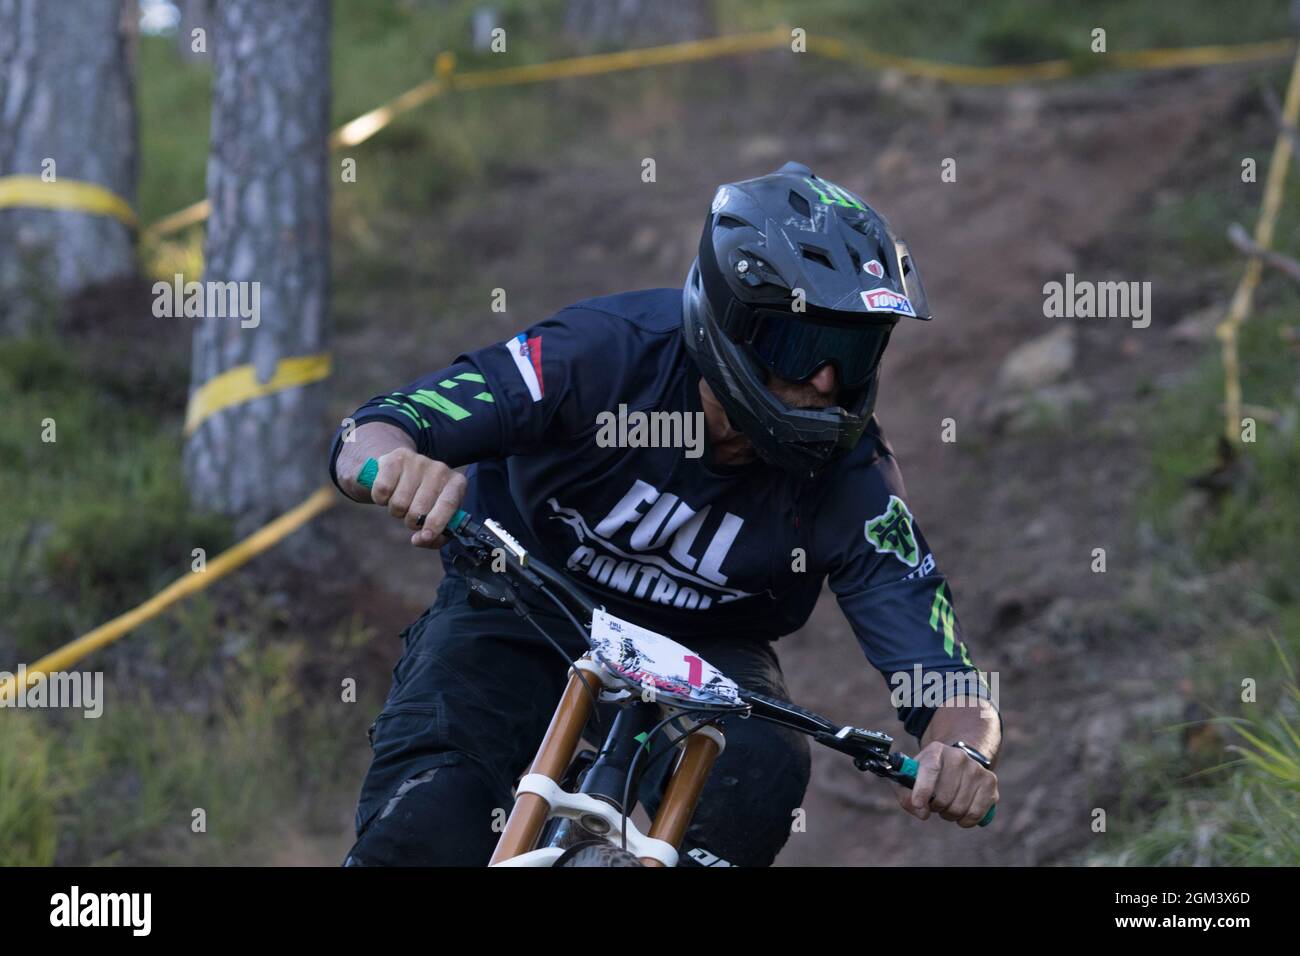 A closeup of a downhill mountain biker riding down a hill Stock Photo